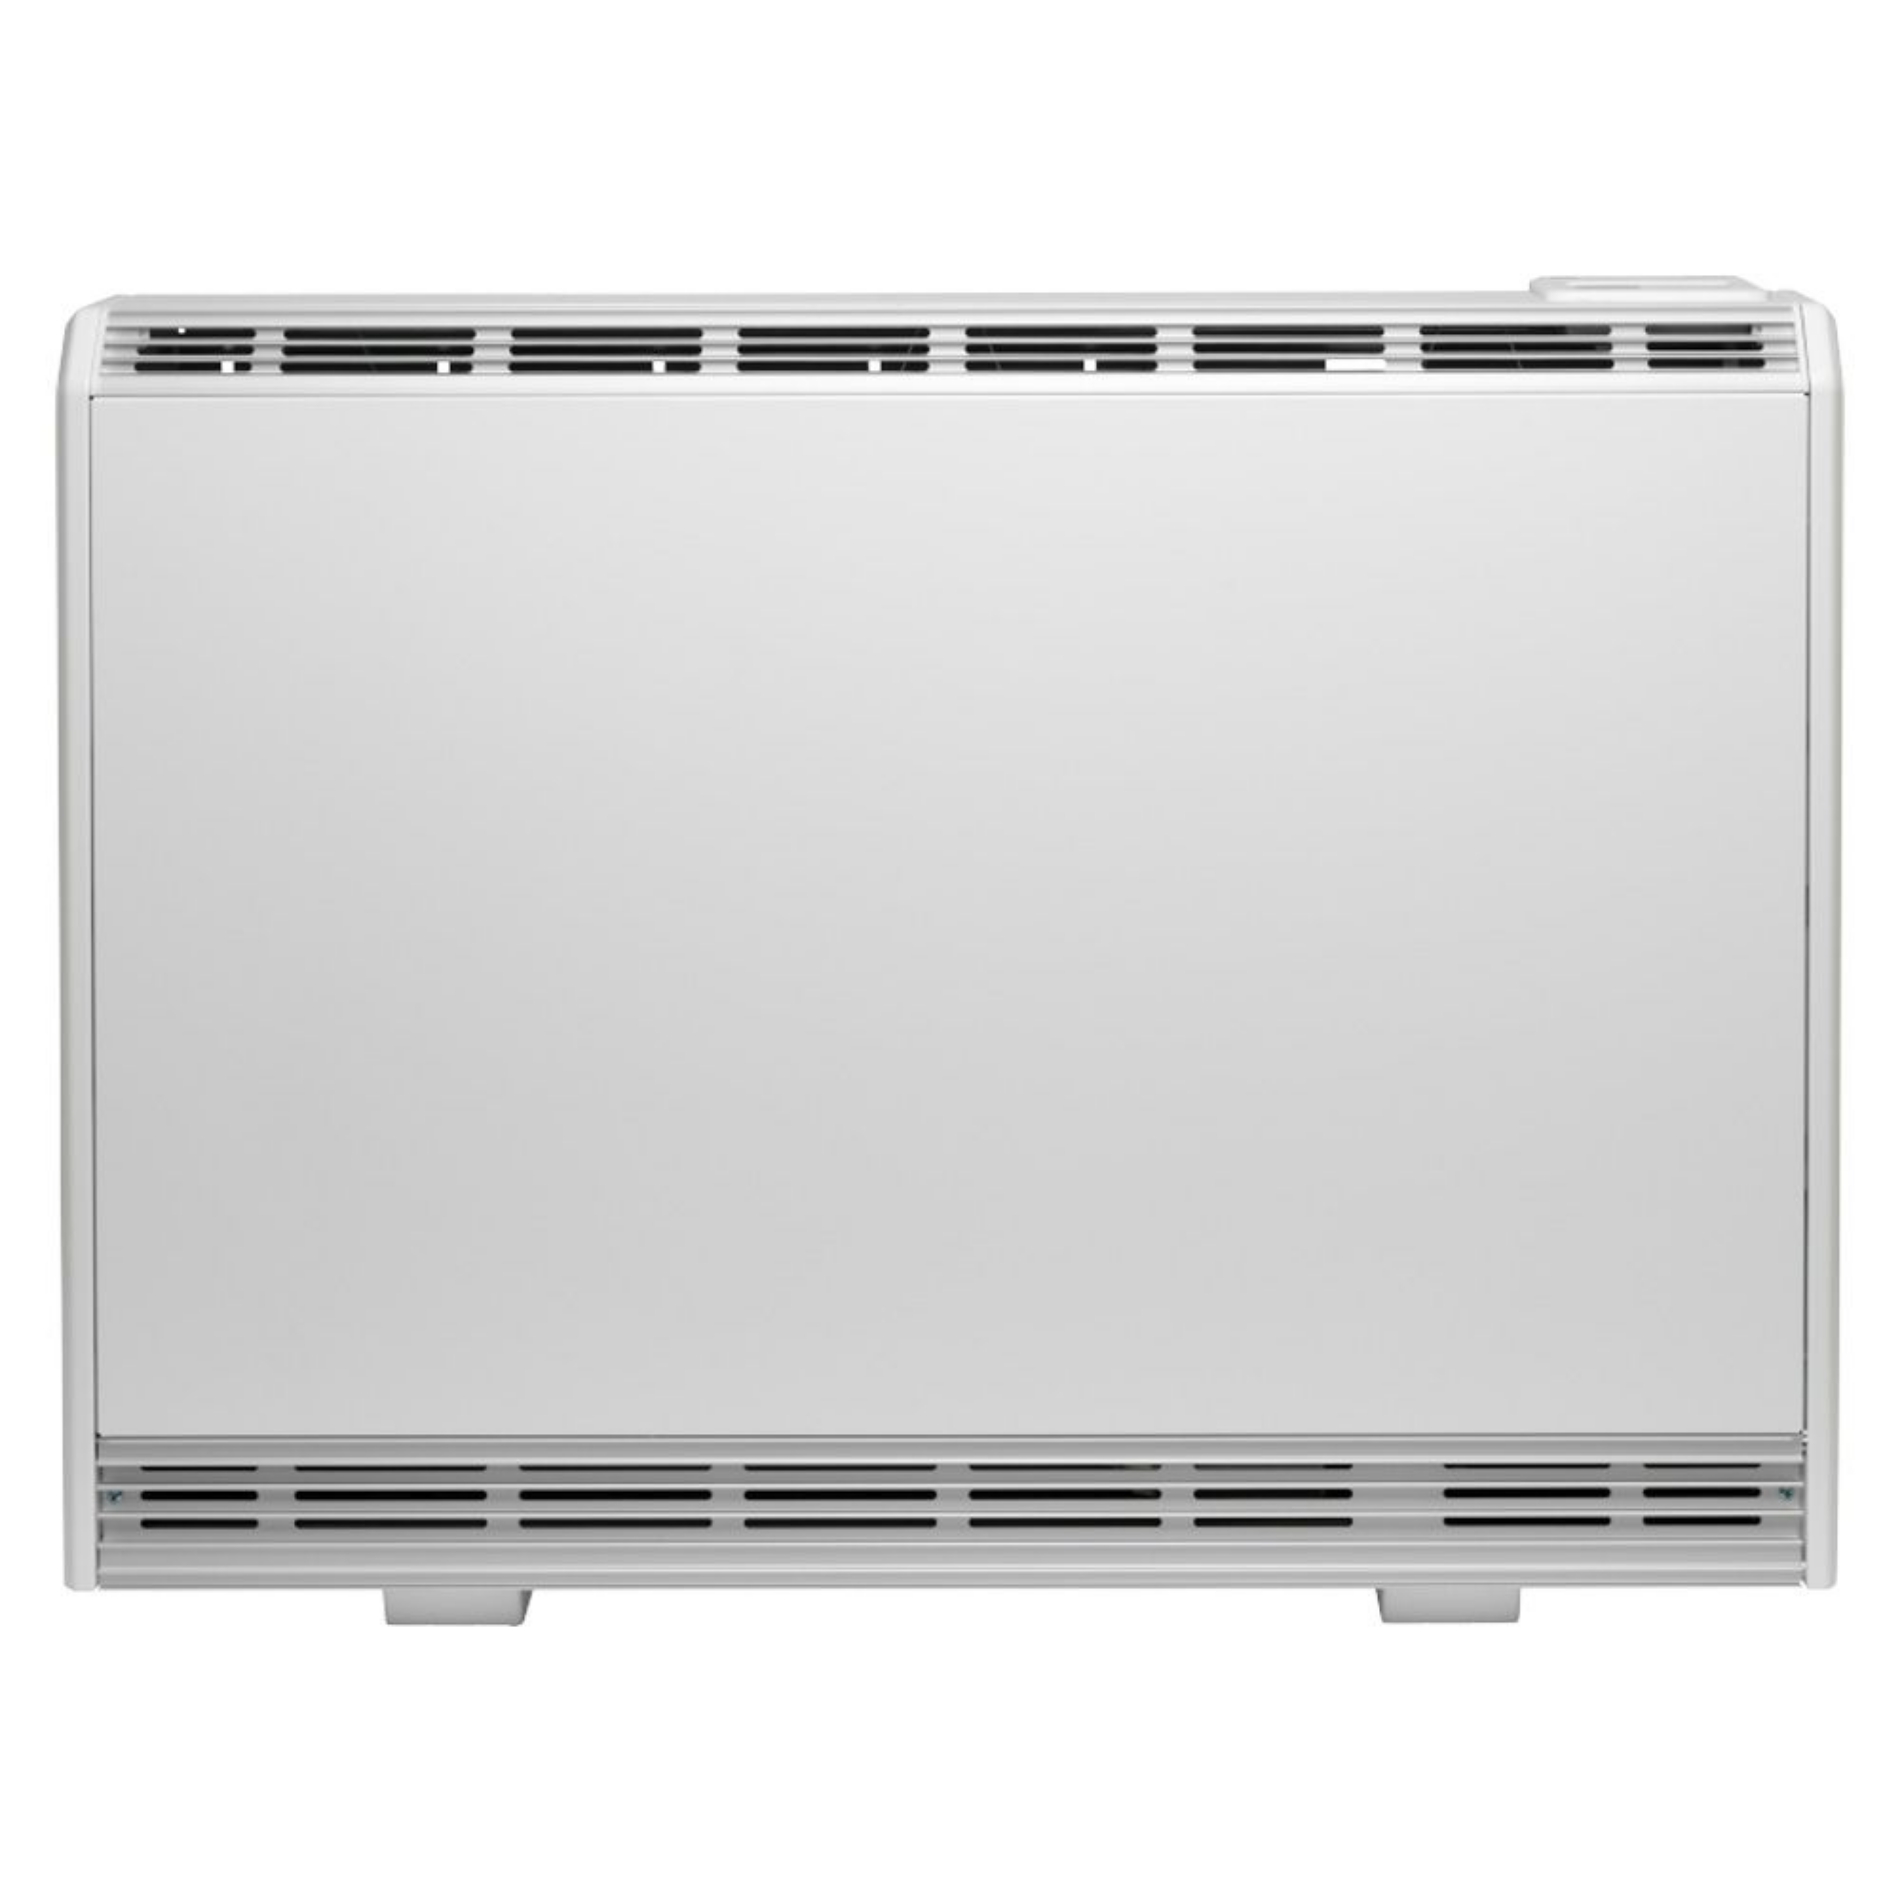 Creda TSRE125 1.25kW Slimline Storage Heater   2